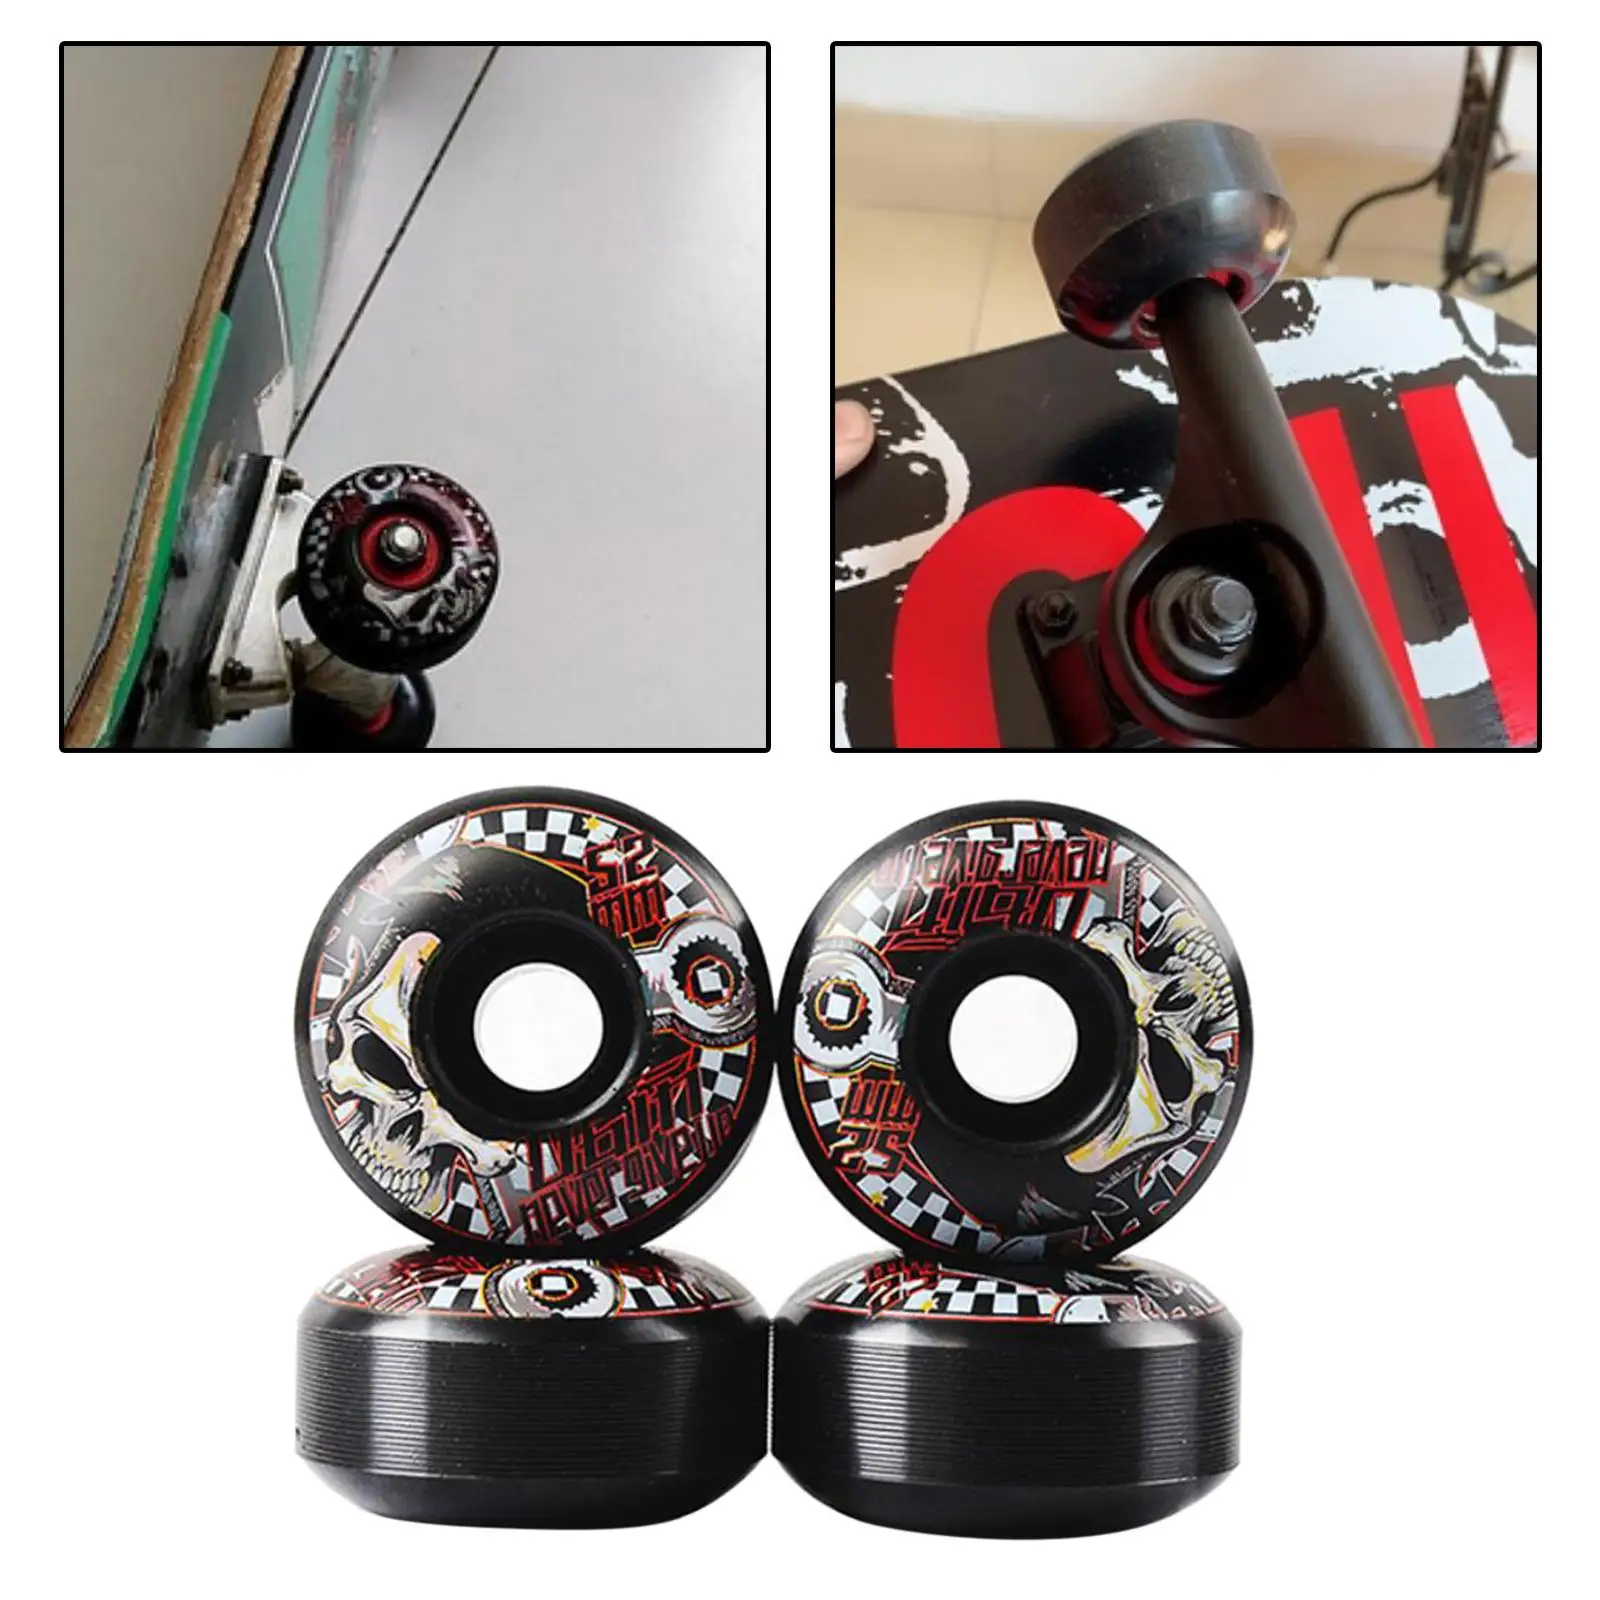 4x Skateboard Wheels Set 52x30mm Skate Roller Repair Parts